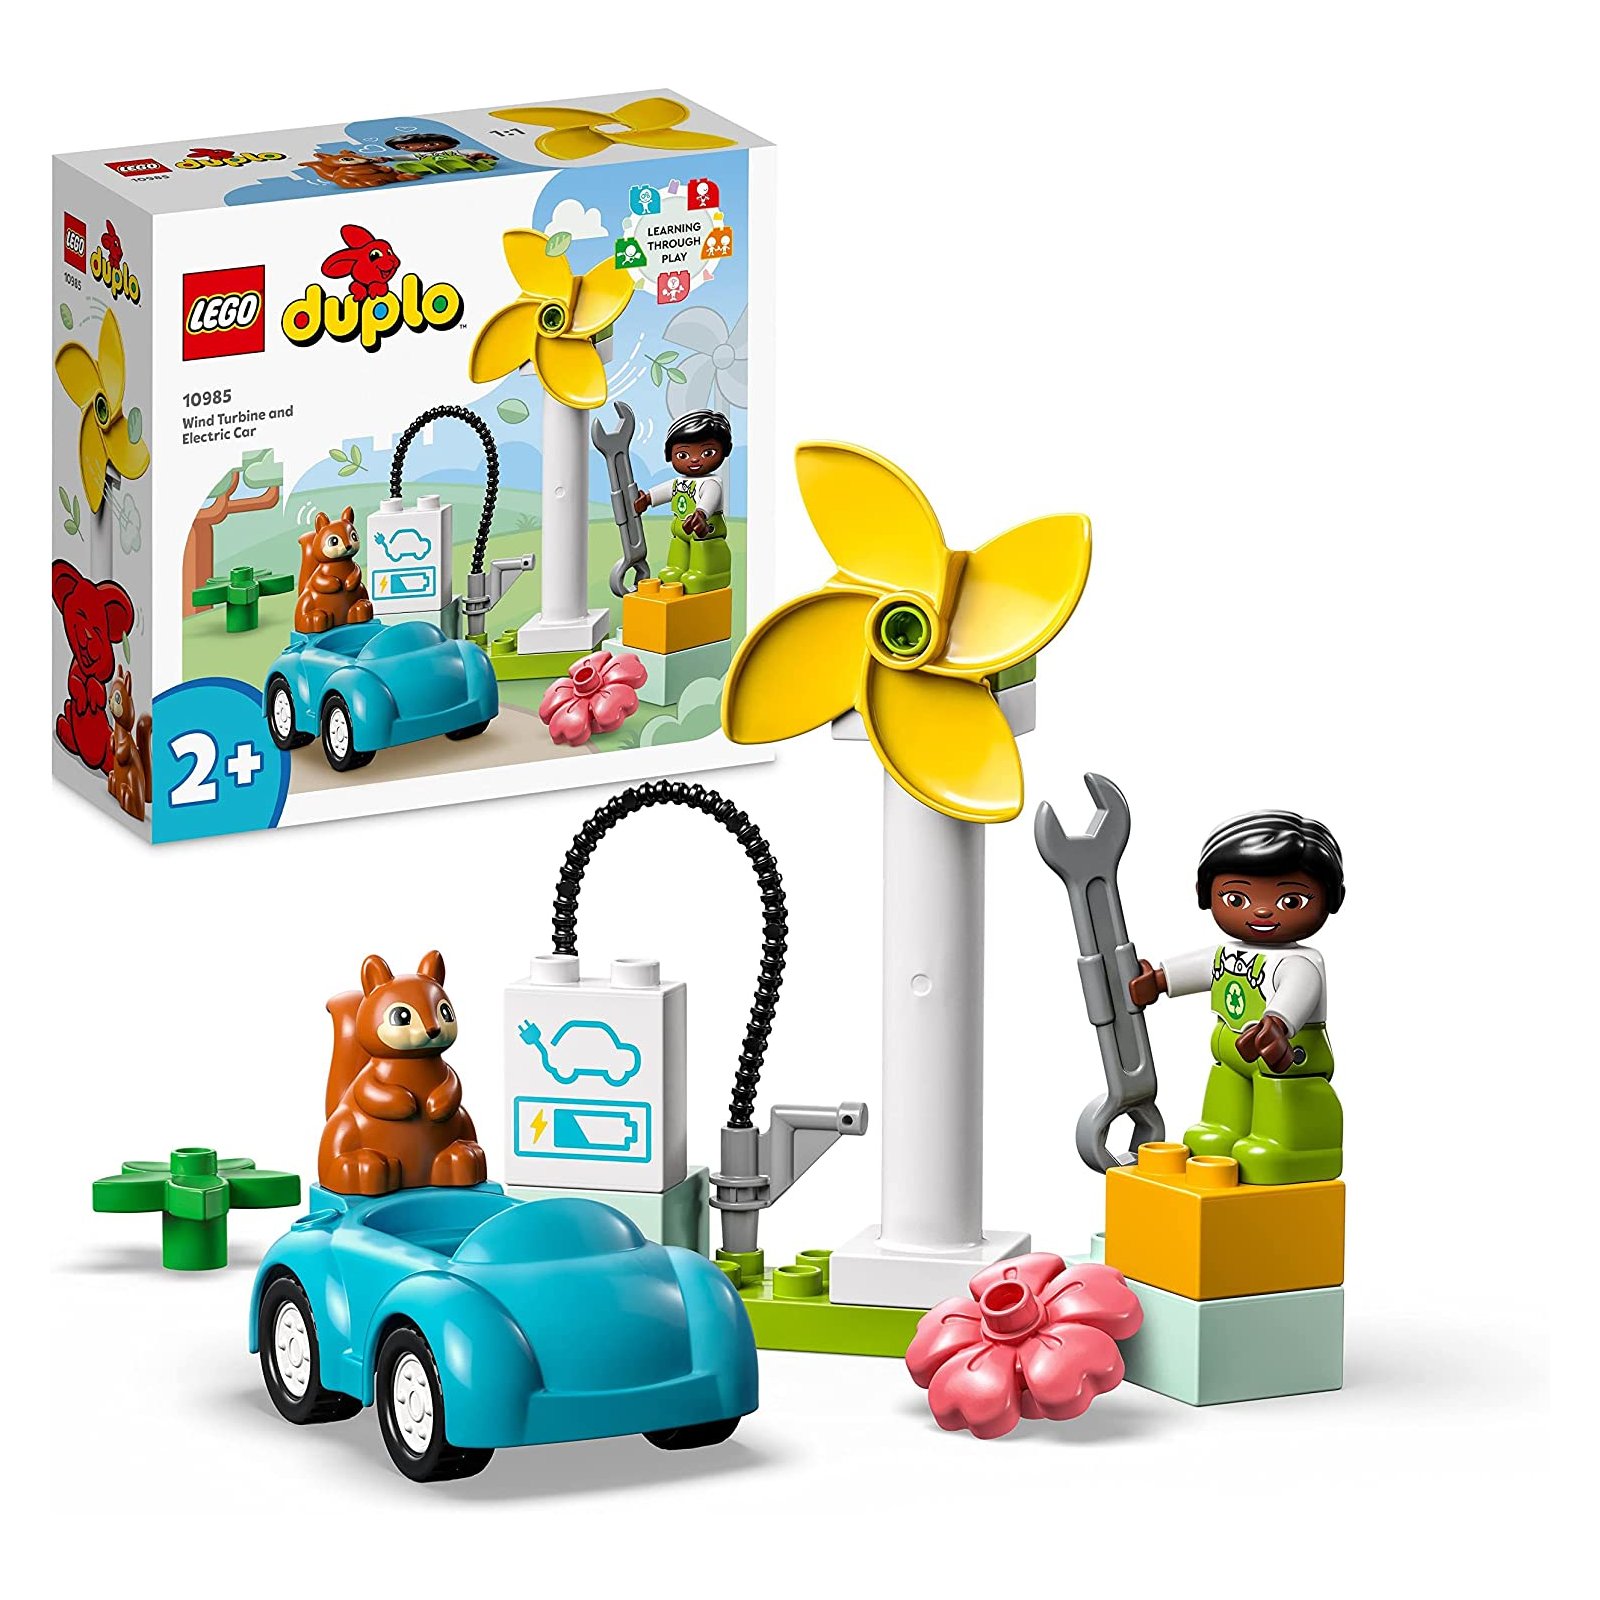 LEGO - Duplo - 10985 Windrad und Elektroauto